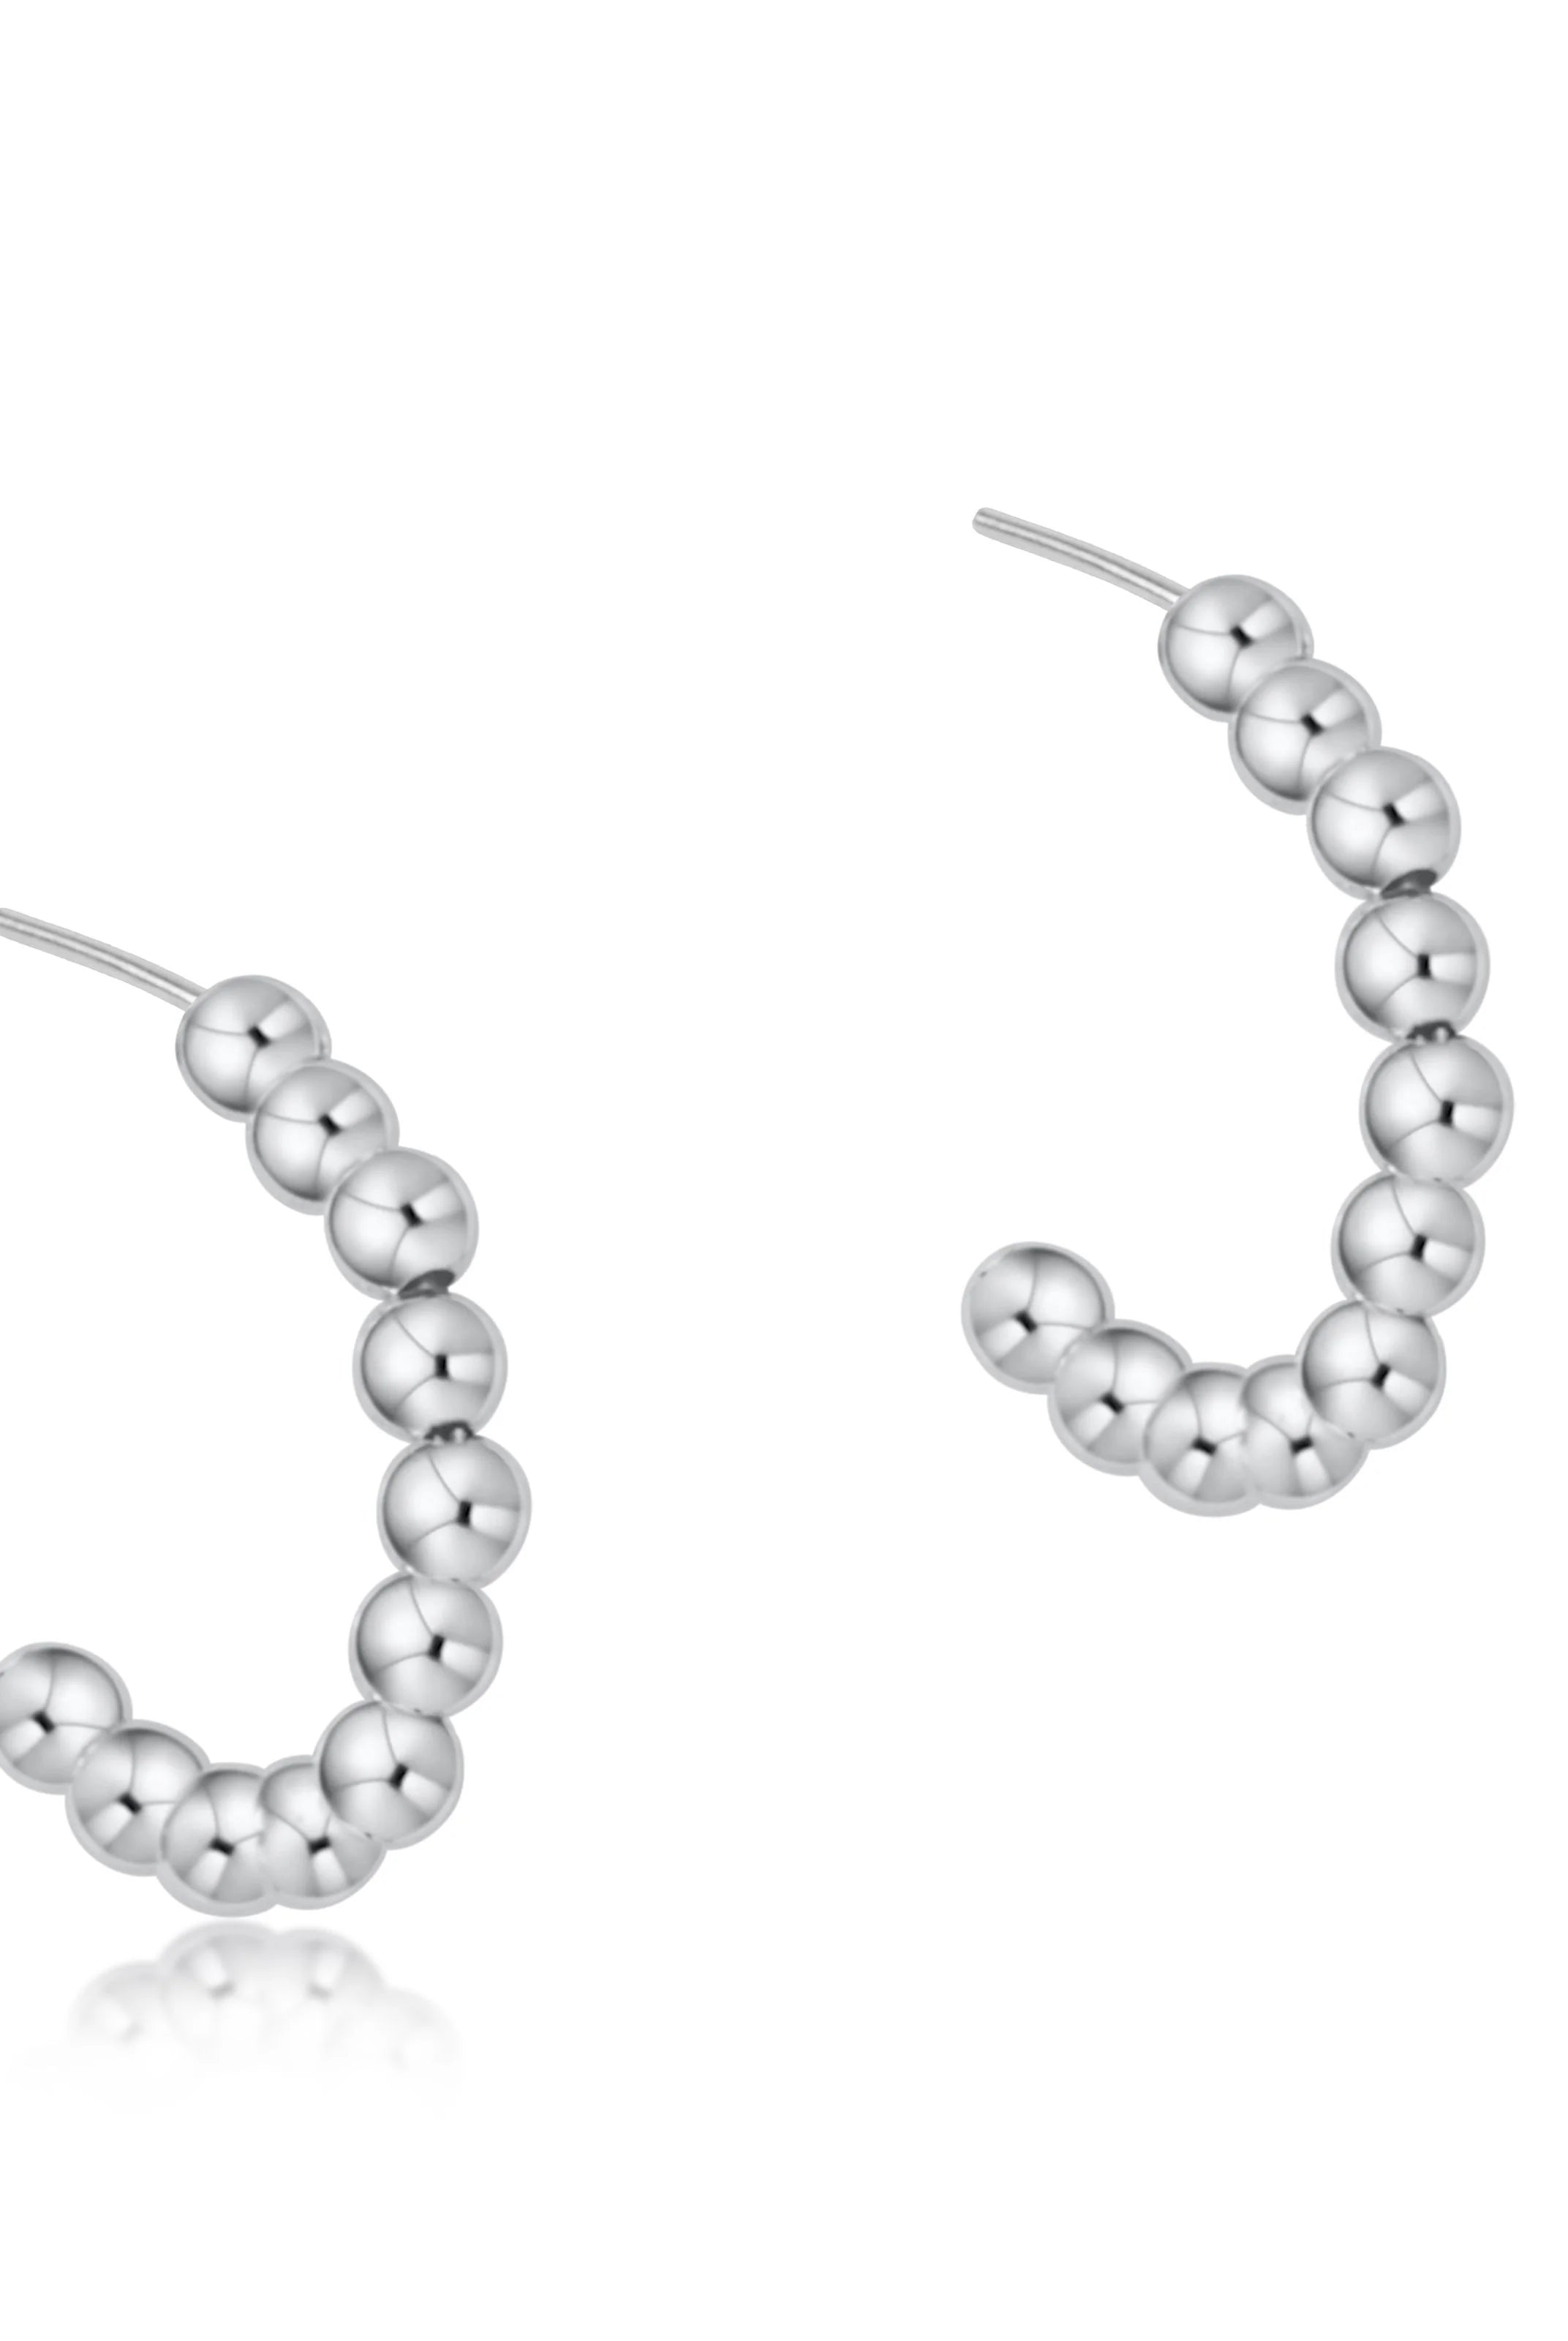 1” Silver Beaded 3mm Post Hoop-Earrings-eNewton-The Lovely Closet, Women's Fashion Boutique in Alexandria, KY